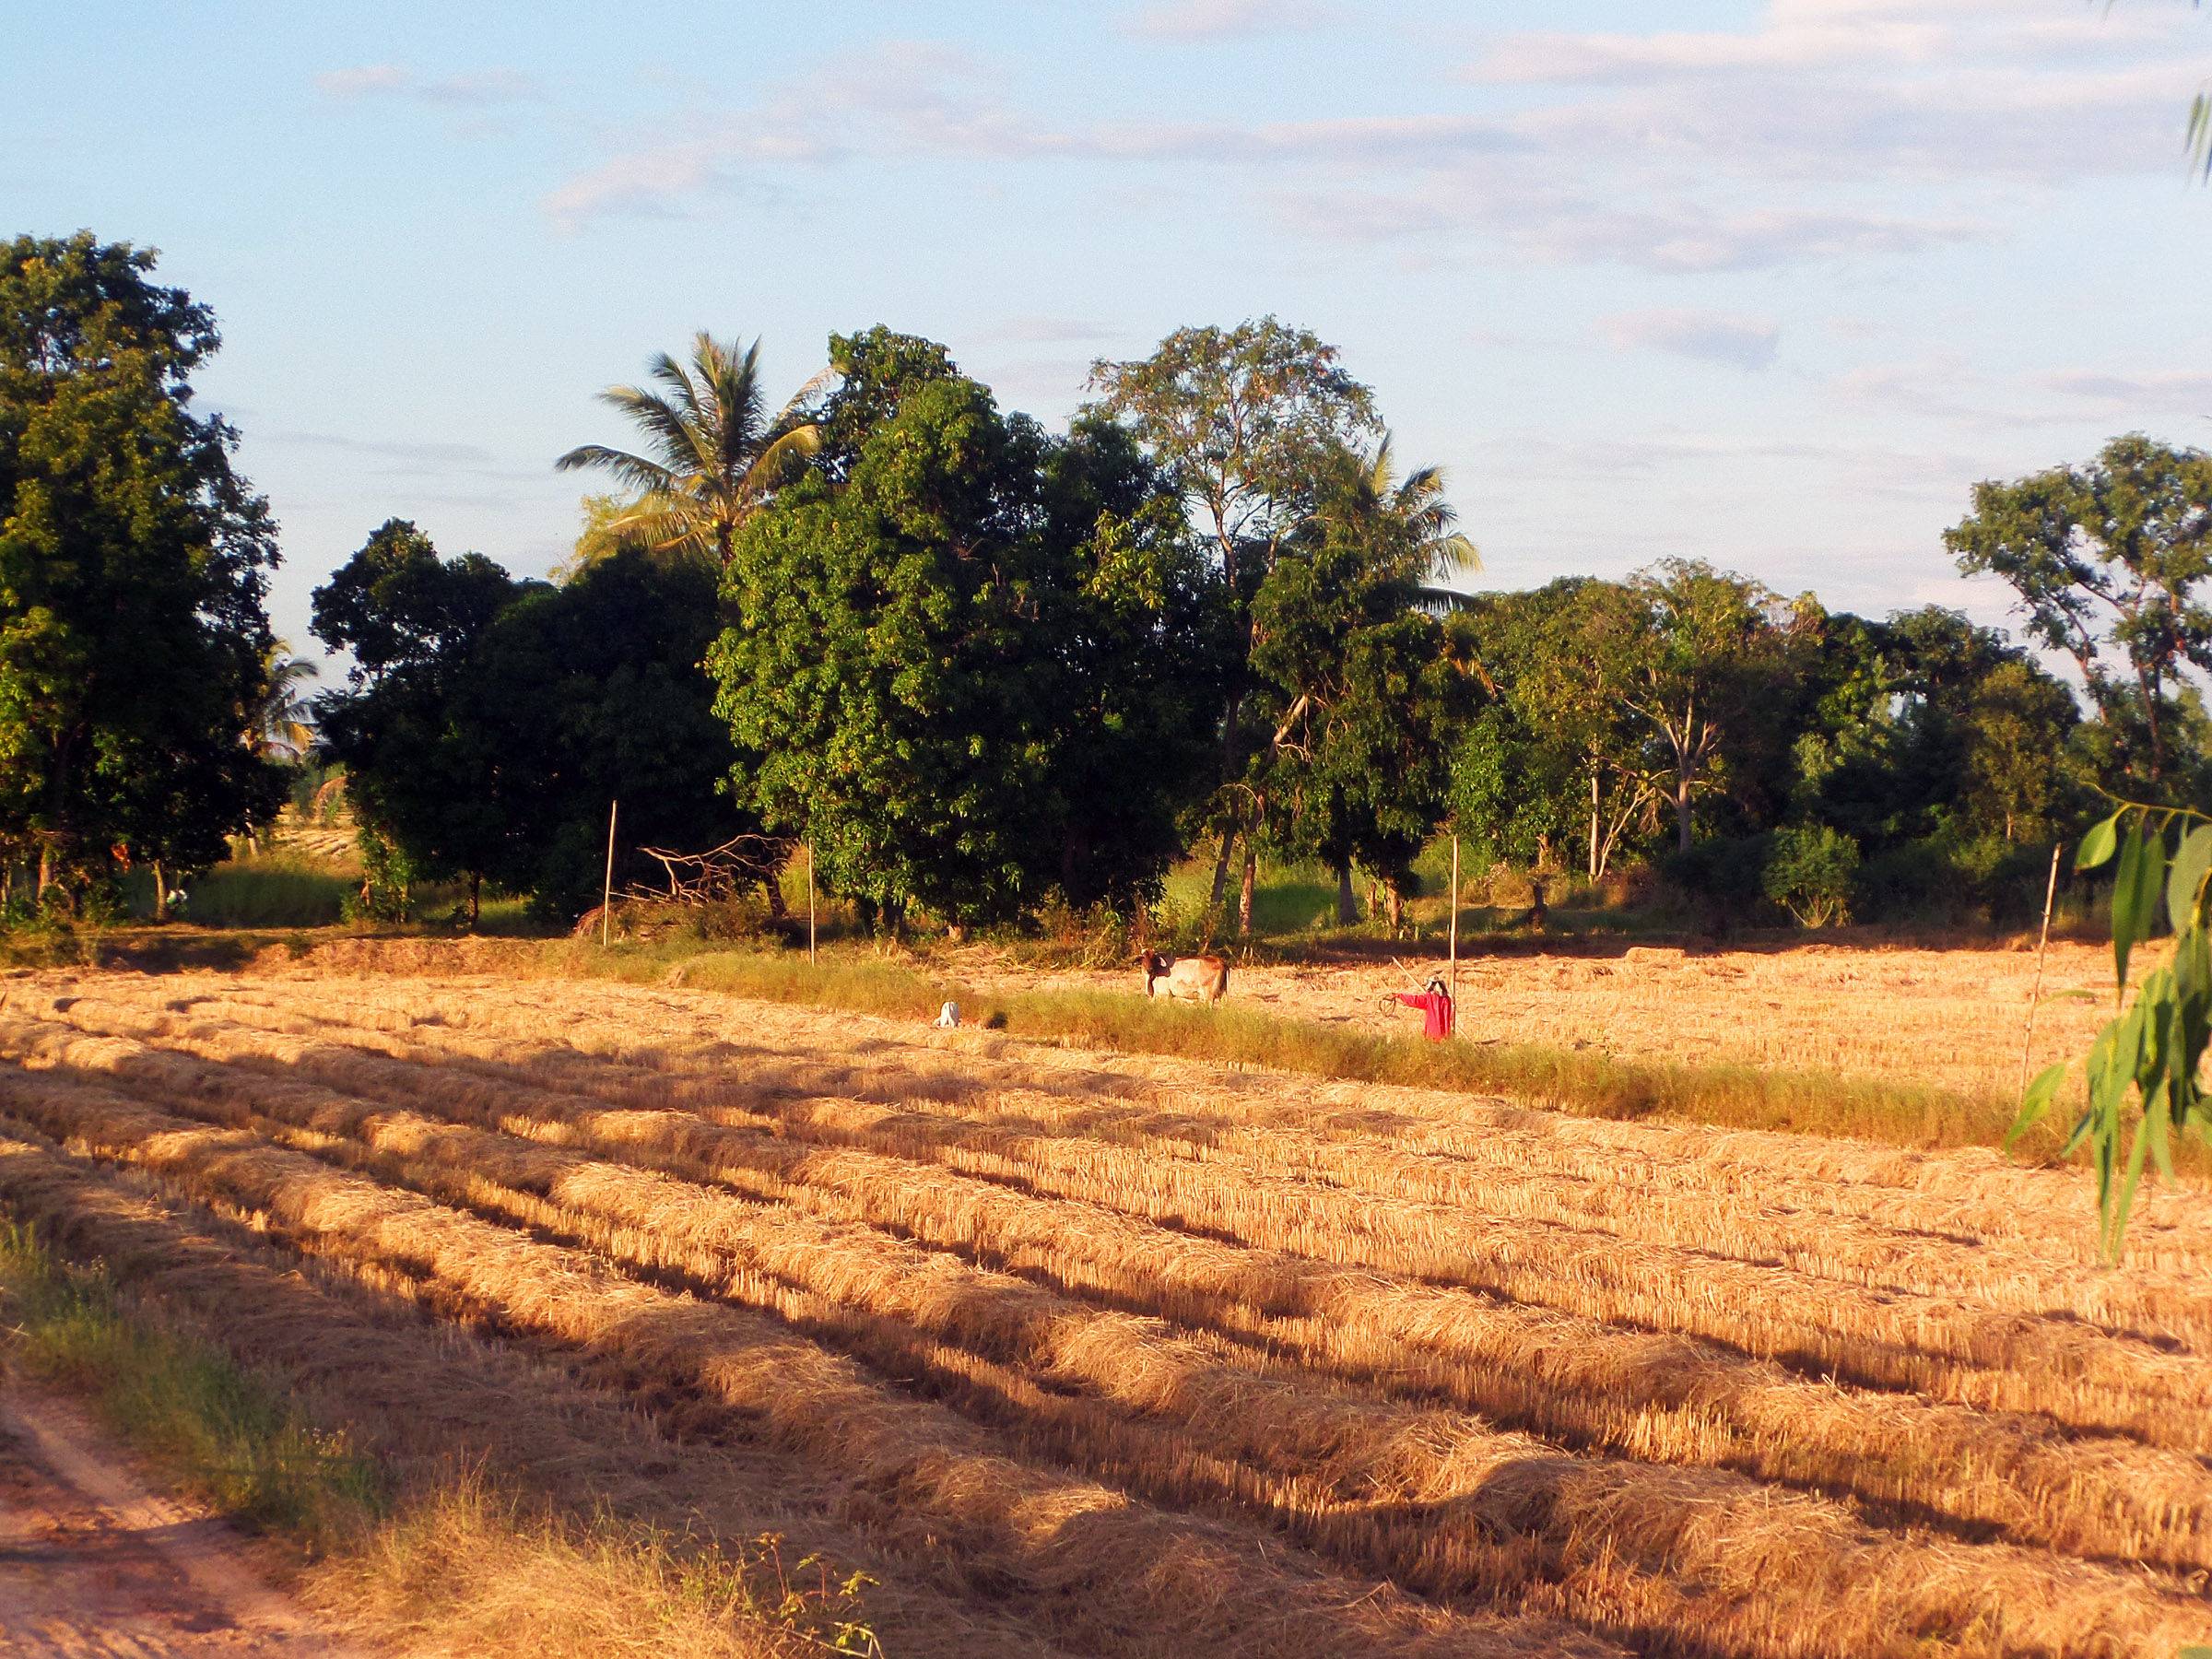 Isan Rice fields